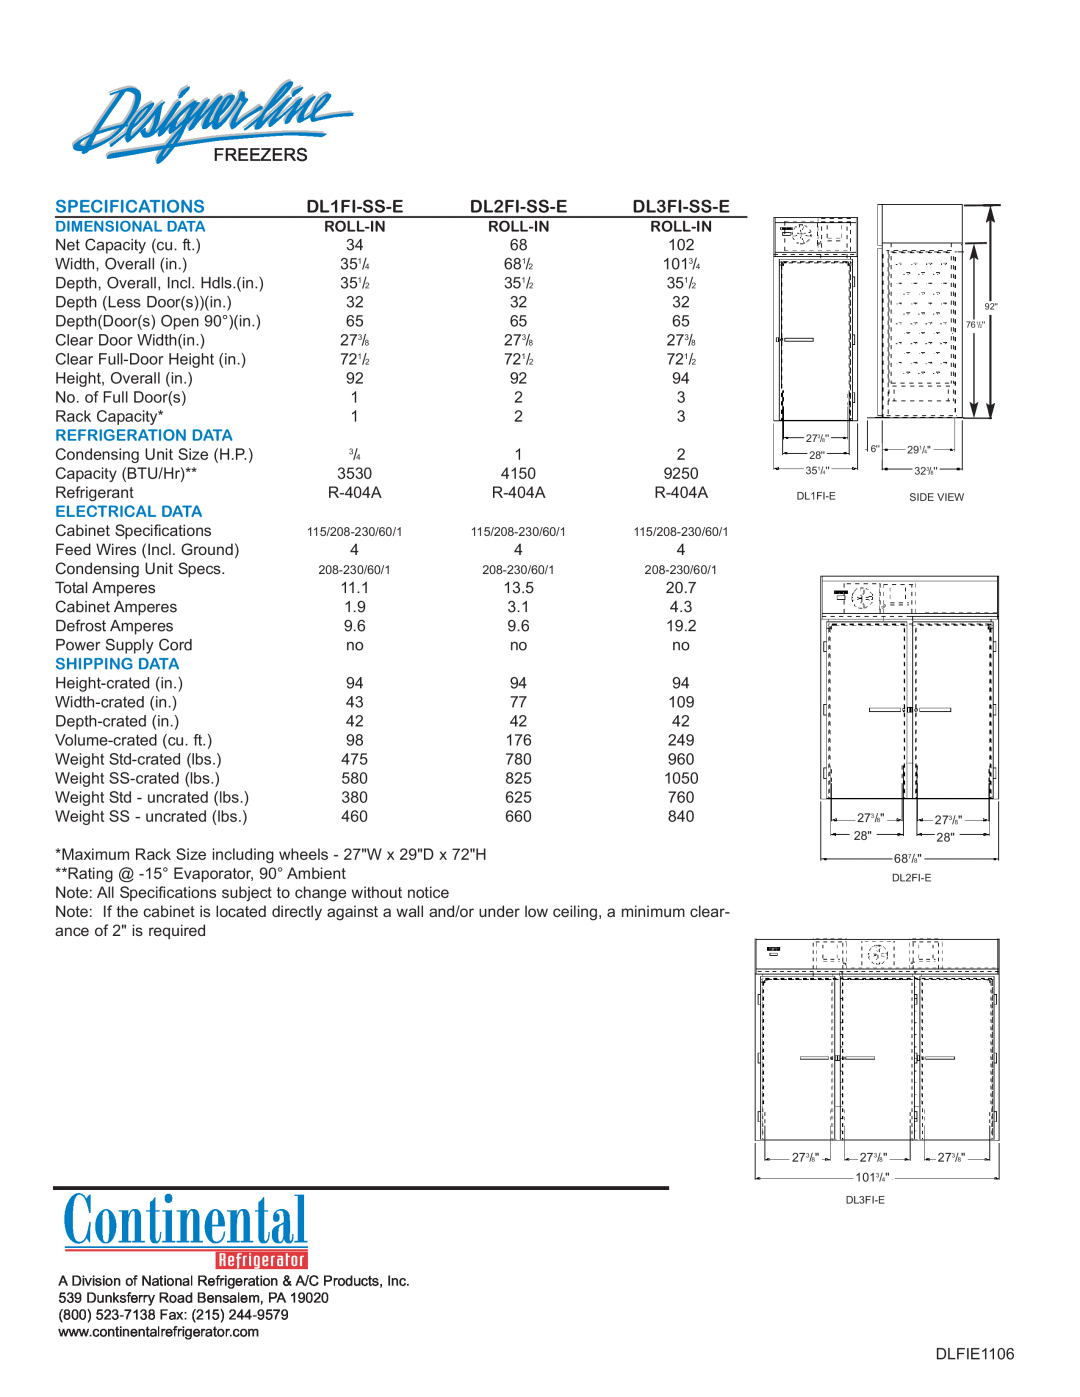 Continental Refrigerator DL1FI-SS-E Freezers, Specifications, DL2FI-SS-E, DL3FI-SS-E, Refrigeration Data, Electrical Data 